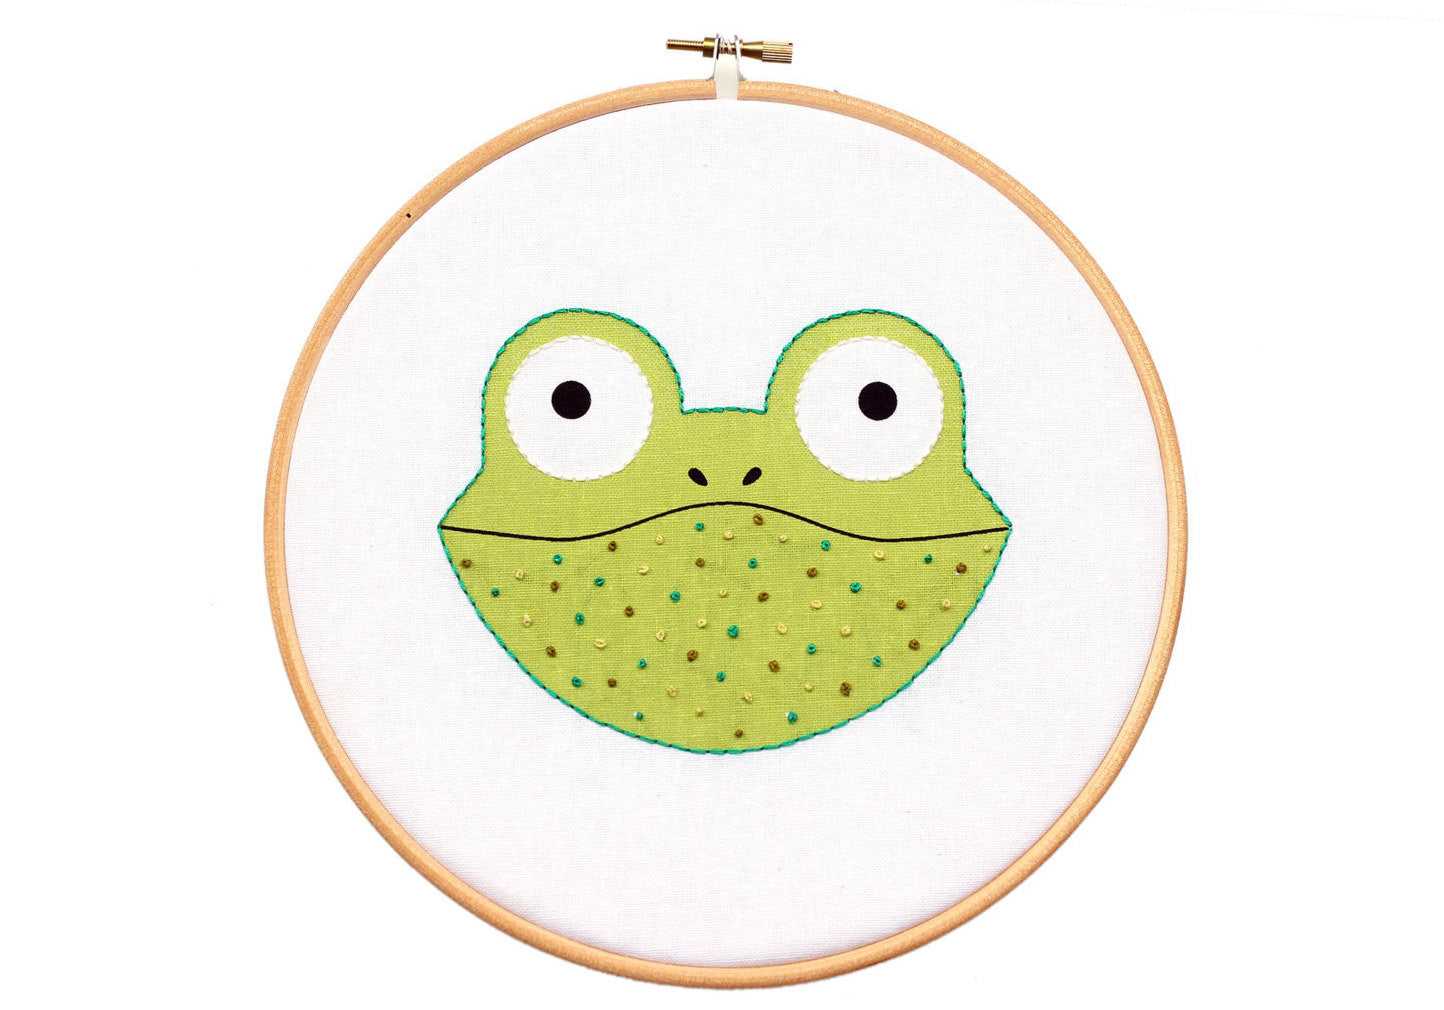 Froggie - Hoop Art Kit